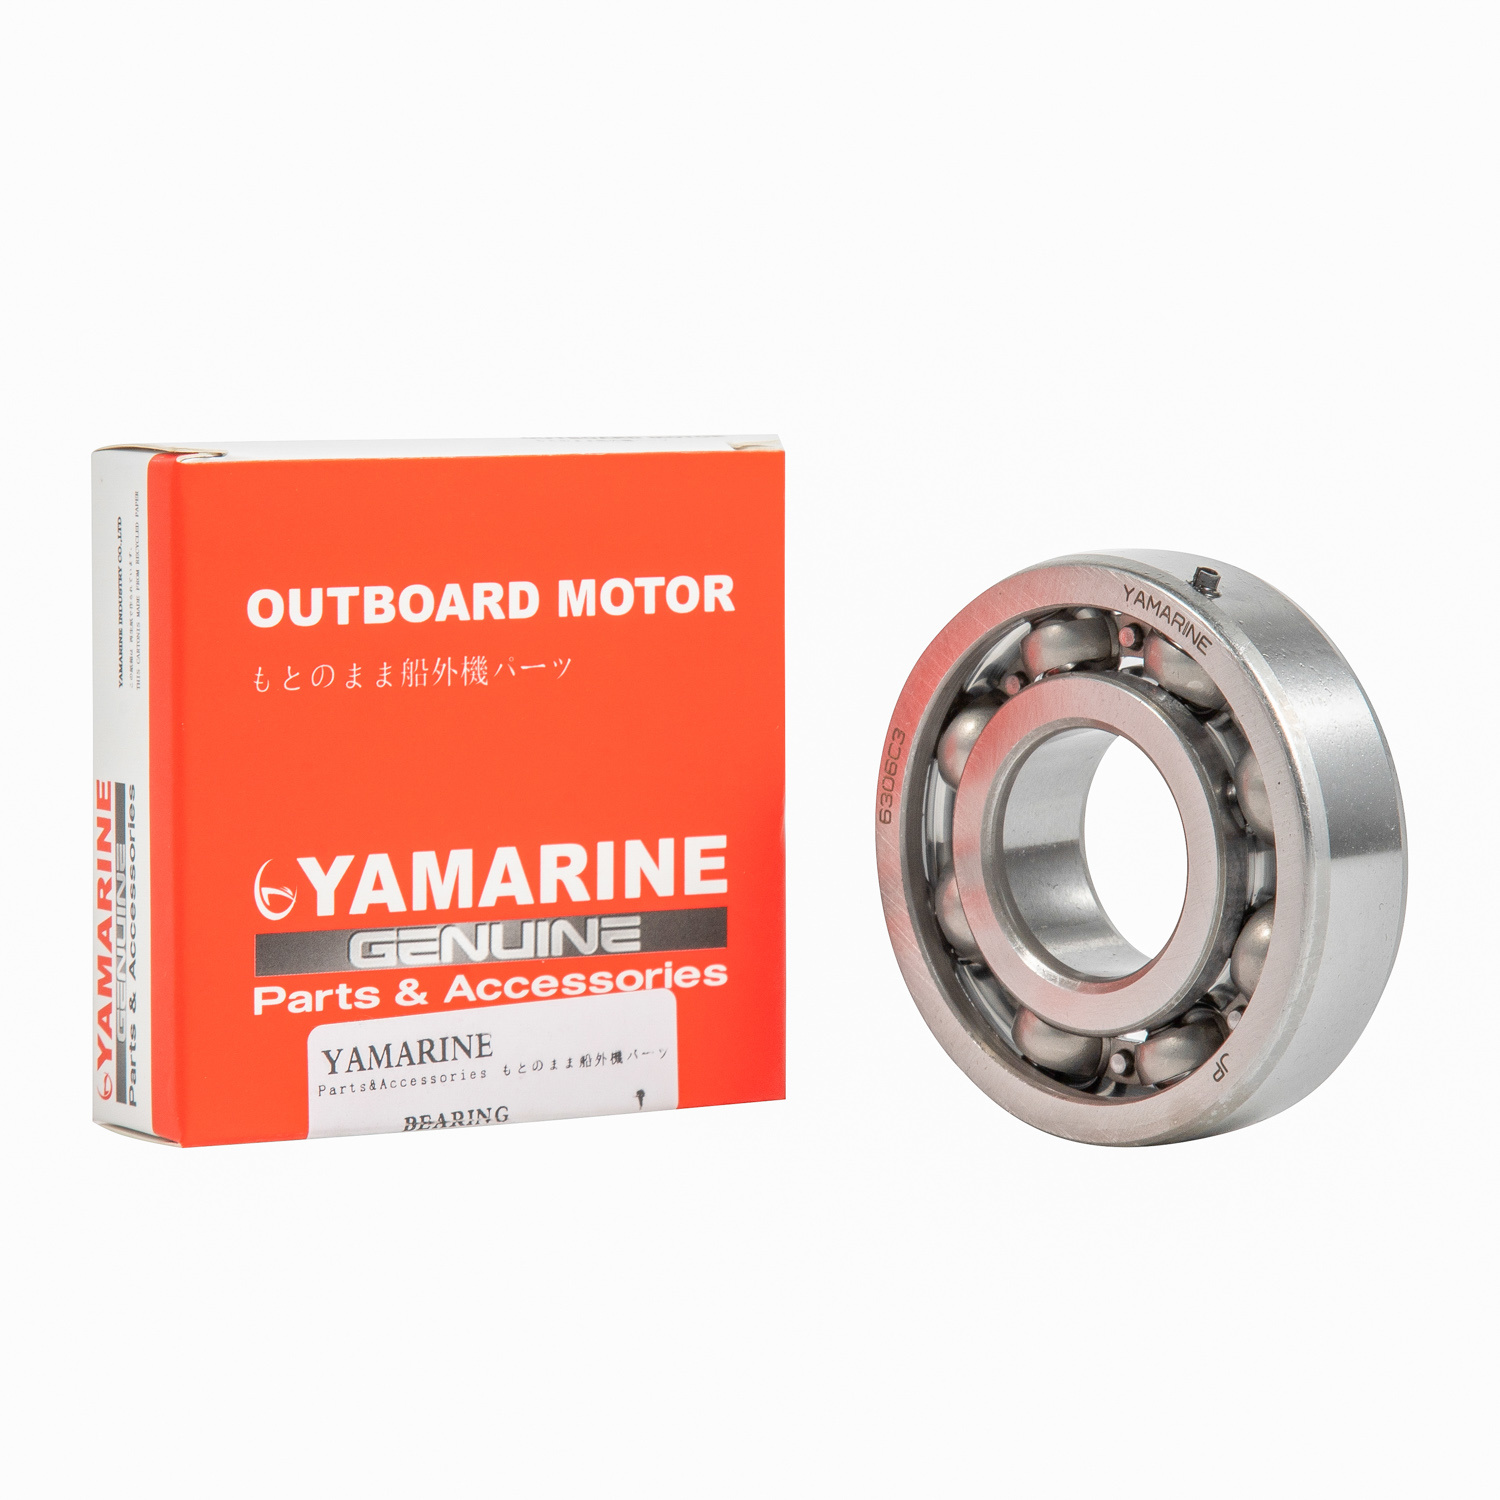 Yamarine Outboard Piston Kit 6f5-11631-00-95, 6f6-11631-00-95, with Piston Ring 6f5-11603-00 for 40HP, E40g/J YAMAHA Engine